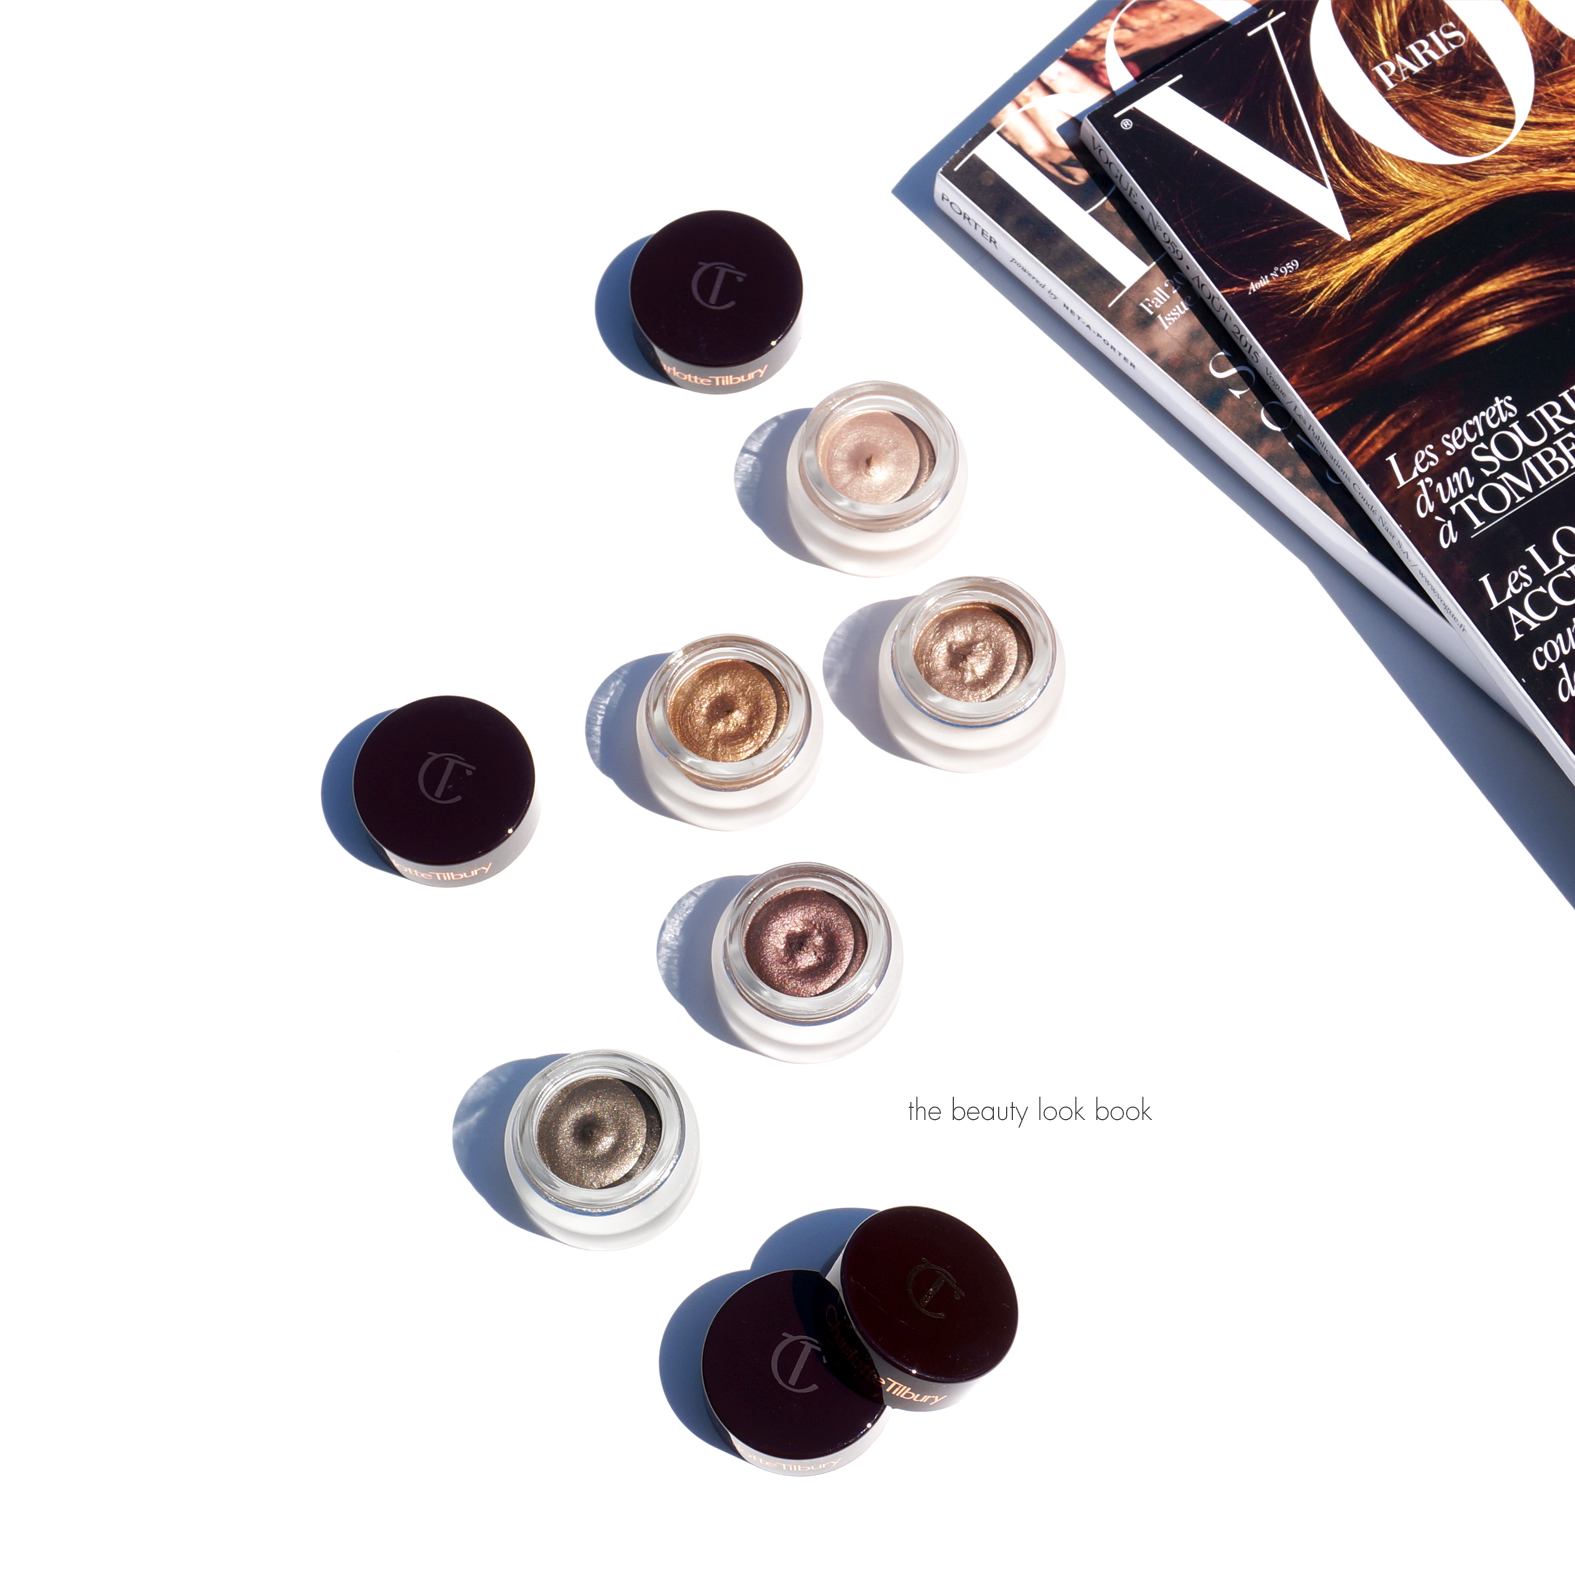 Les 5 Ombres de Chanel Eyeshadow Palette in Entrelacs